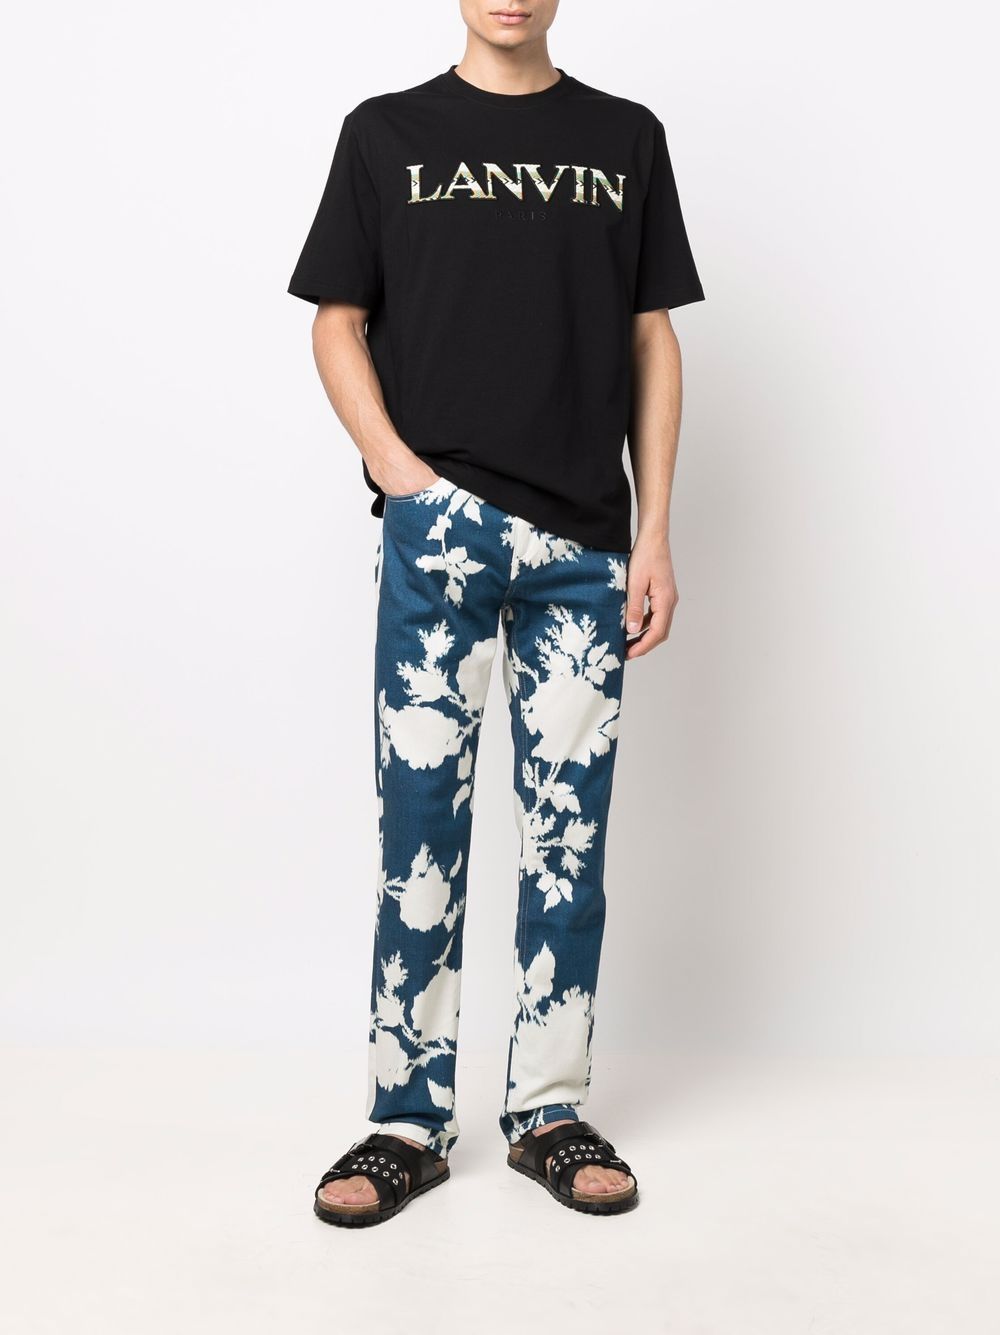 LANVIN Curb Regular T-Shirt Black - MAISONDEFASHION.COM